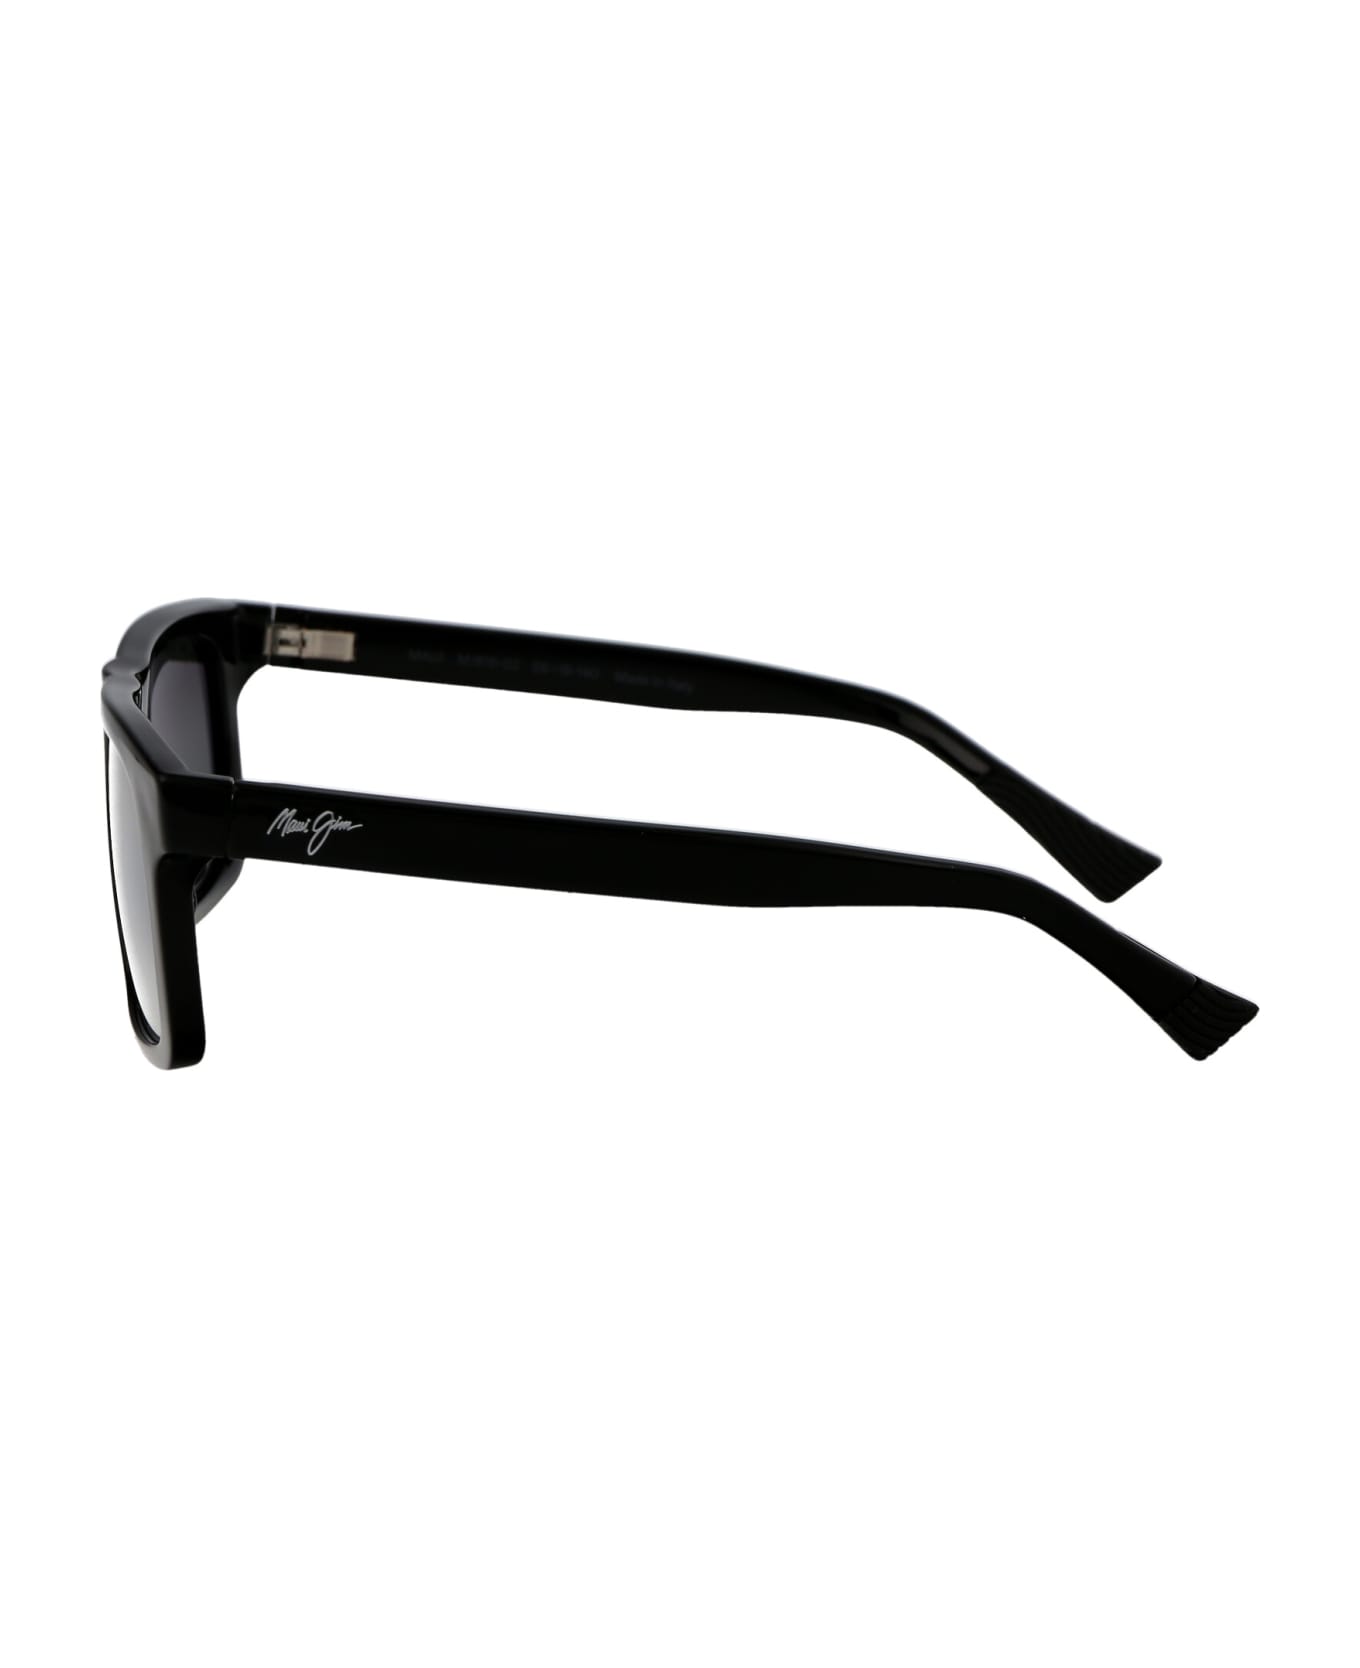 Maui Jim Opio Sunglasses - 002 GREY OPIO SHINY BLACK